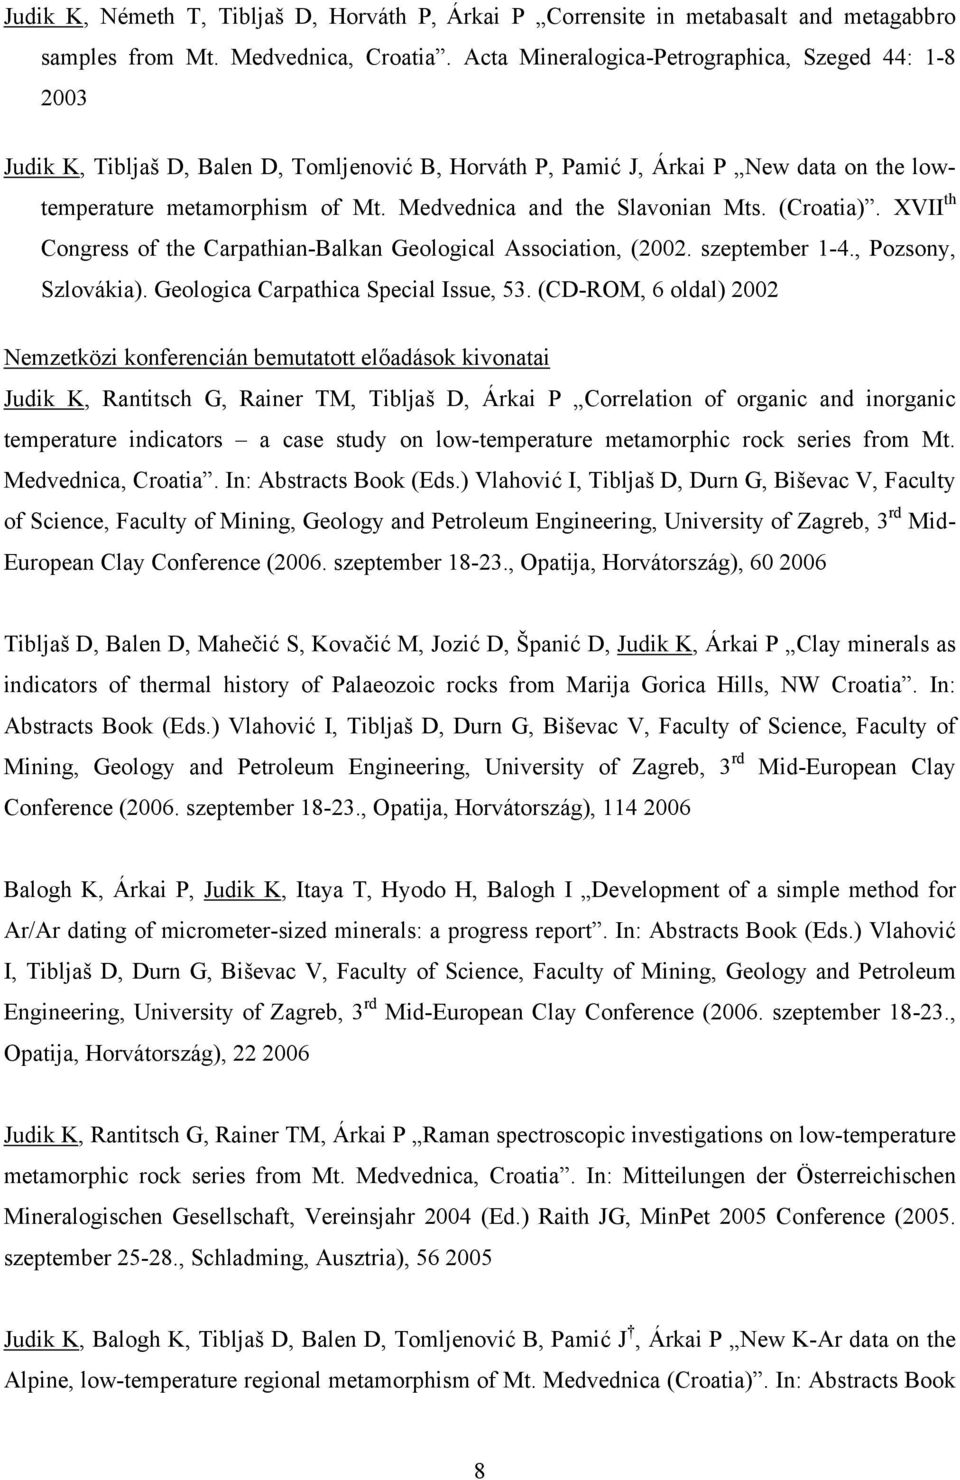 Medvednica and the Slavonian Mts. (Croatia). XVII th Congress of the Carpathian-Balkan Geological Association, (2002. szeptember 1-4., Pozsony, Szlovákia). Geologica Carpathica Special Issue, 53.